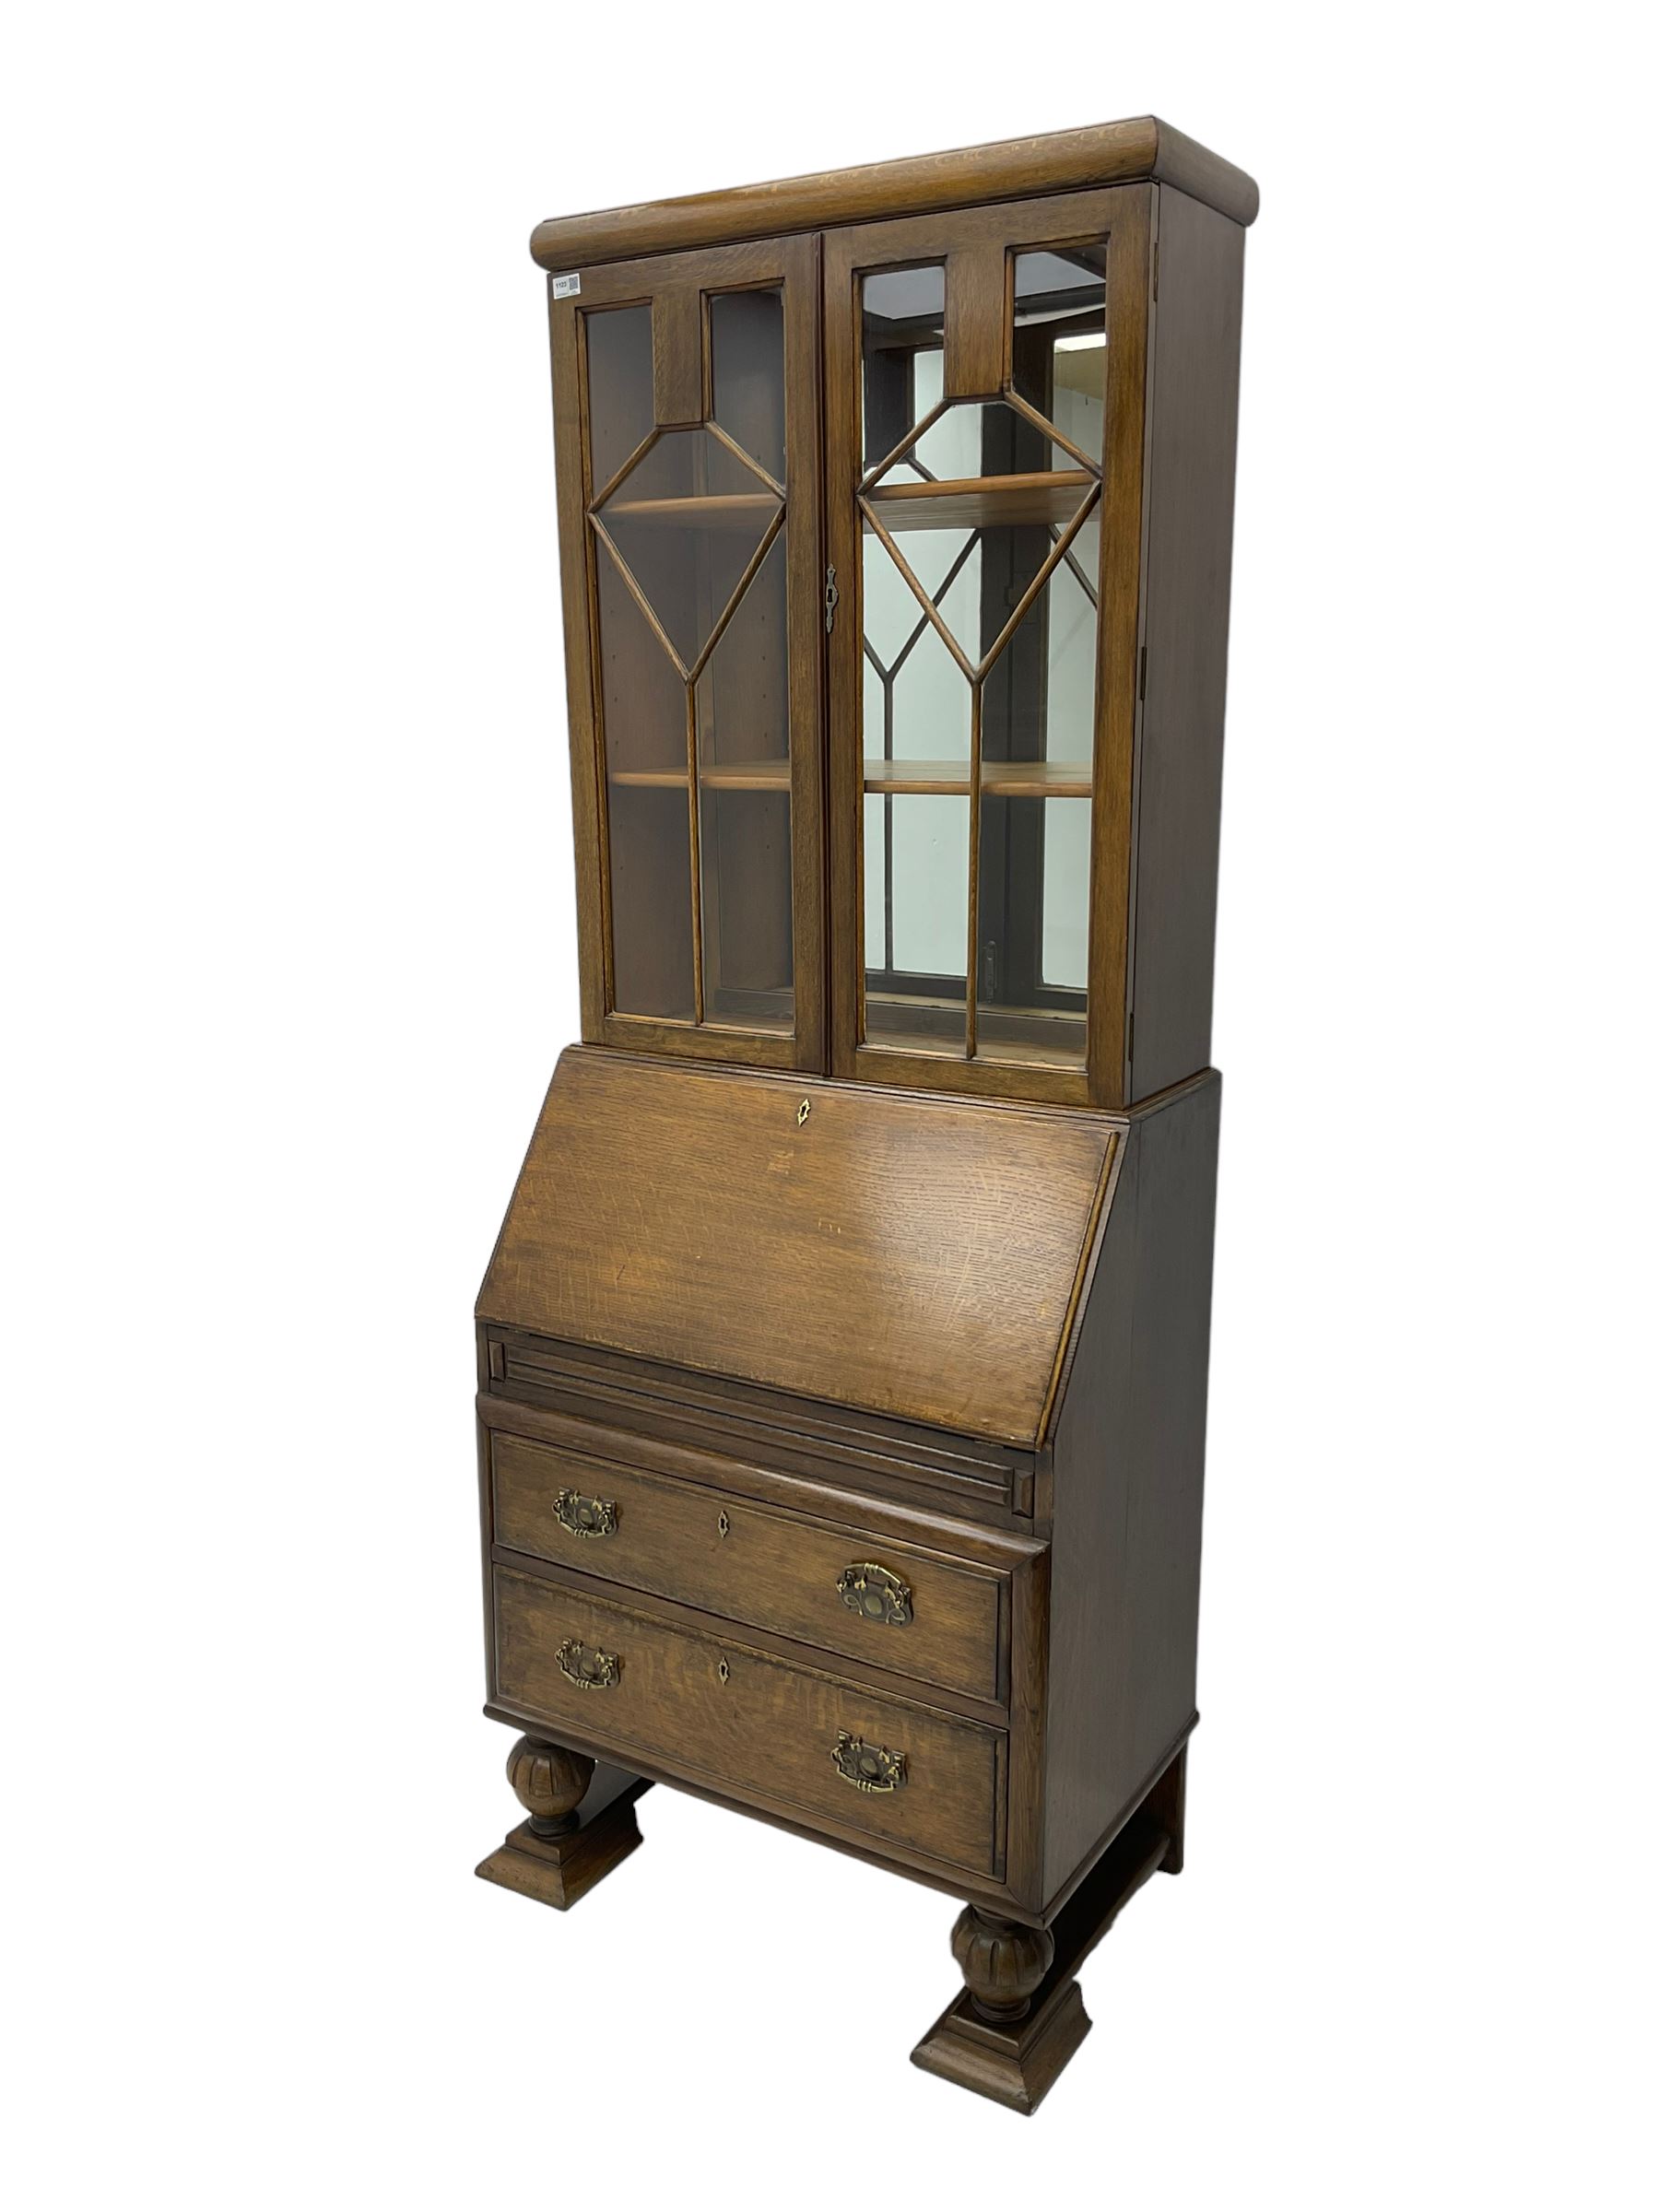 Early 20th century oak bureau bookcase - Image 7 of 7